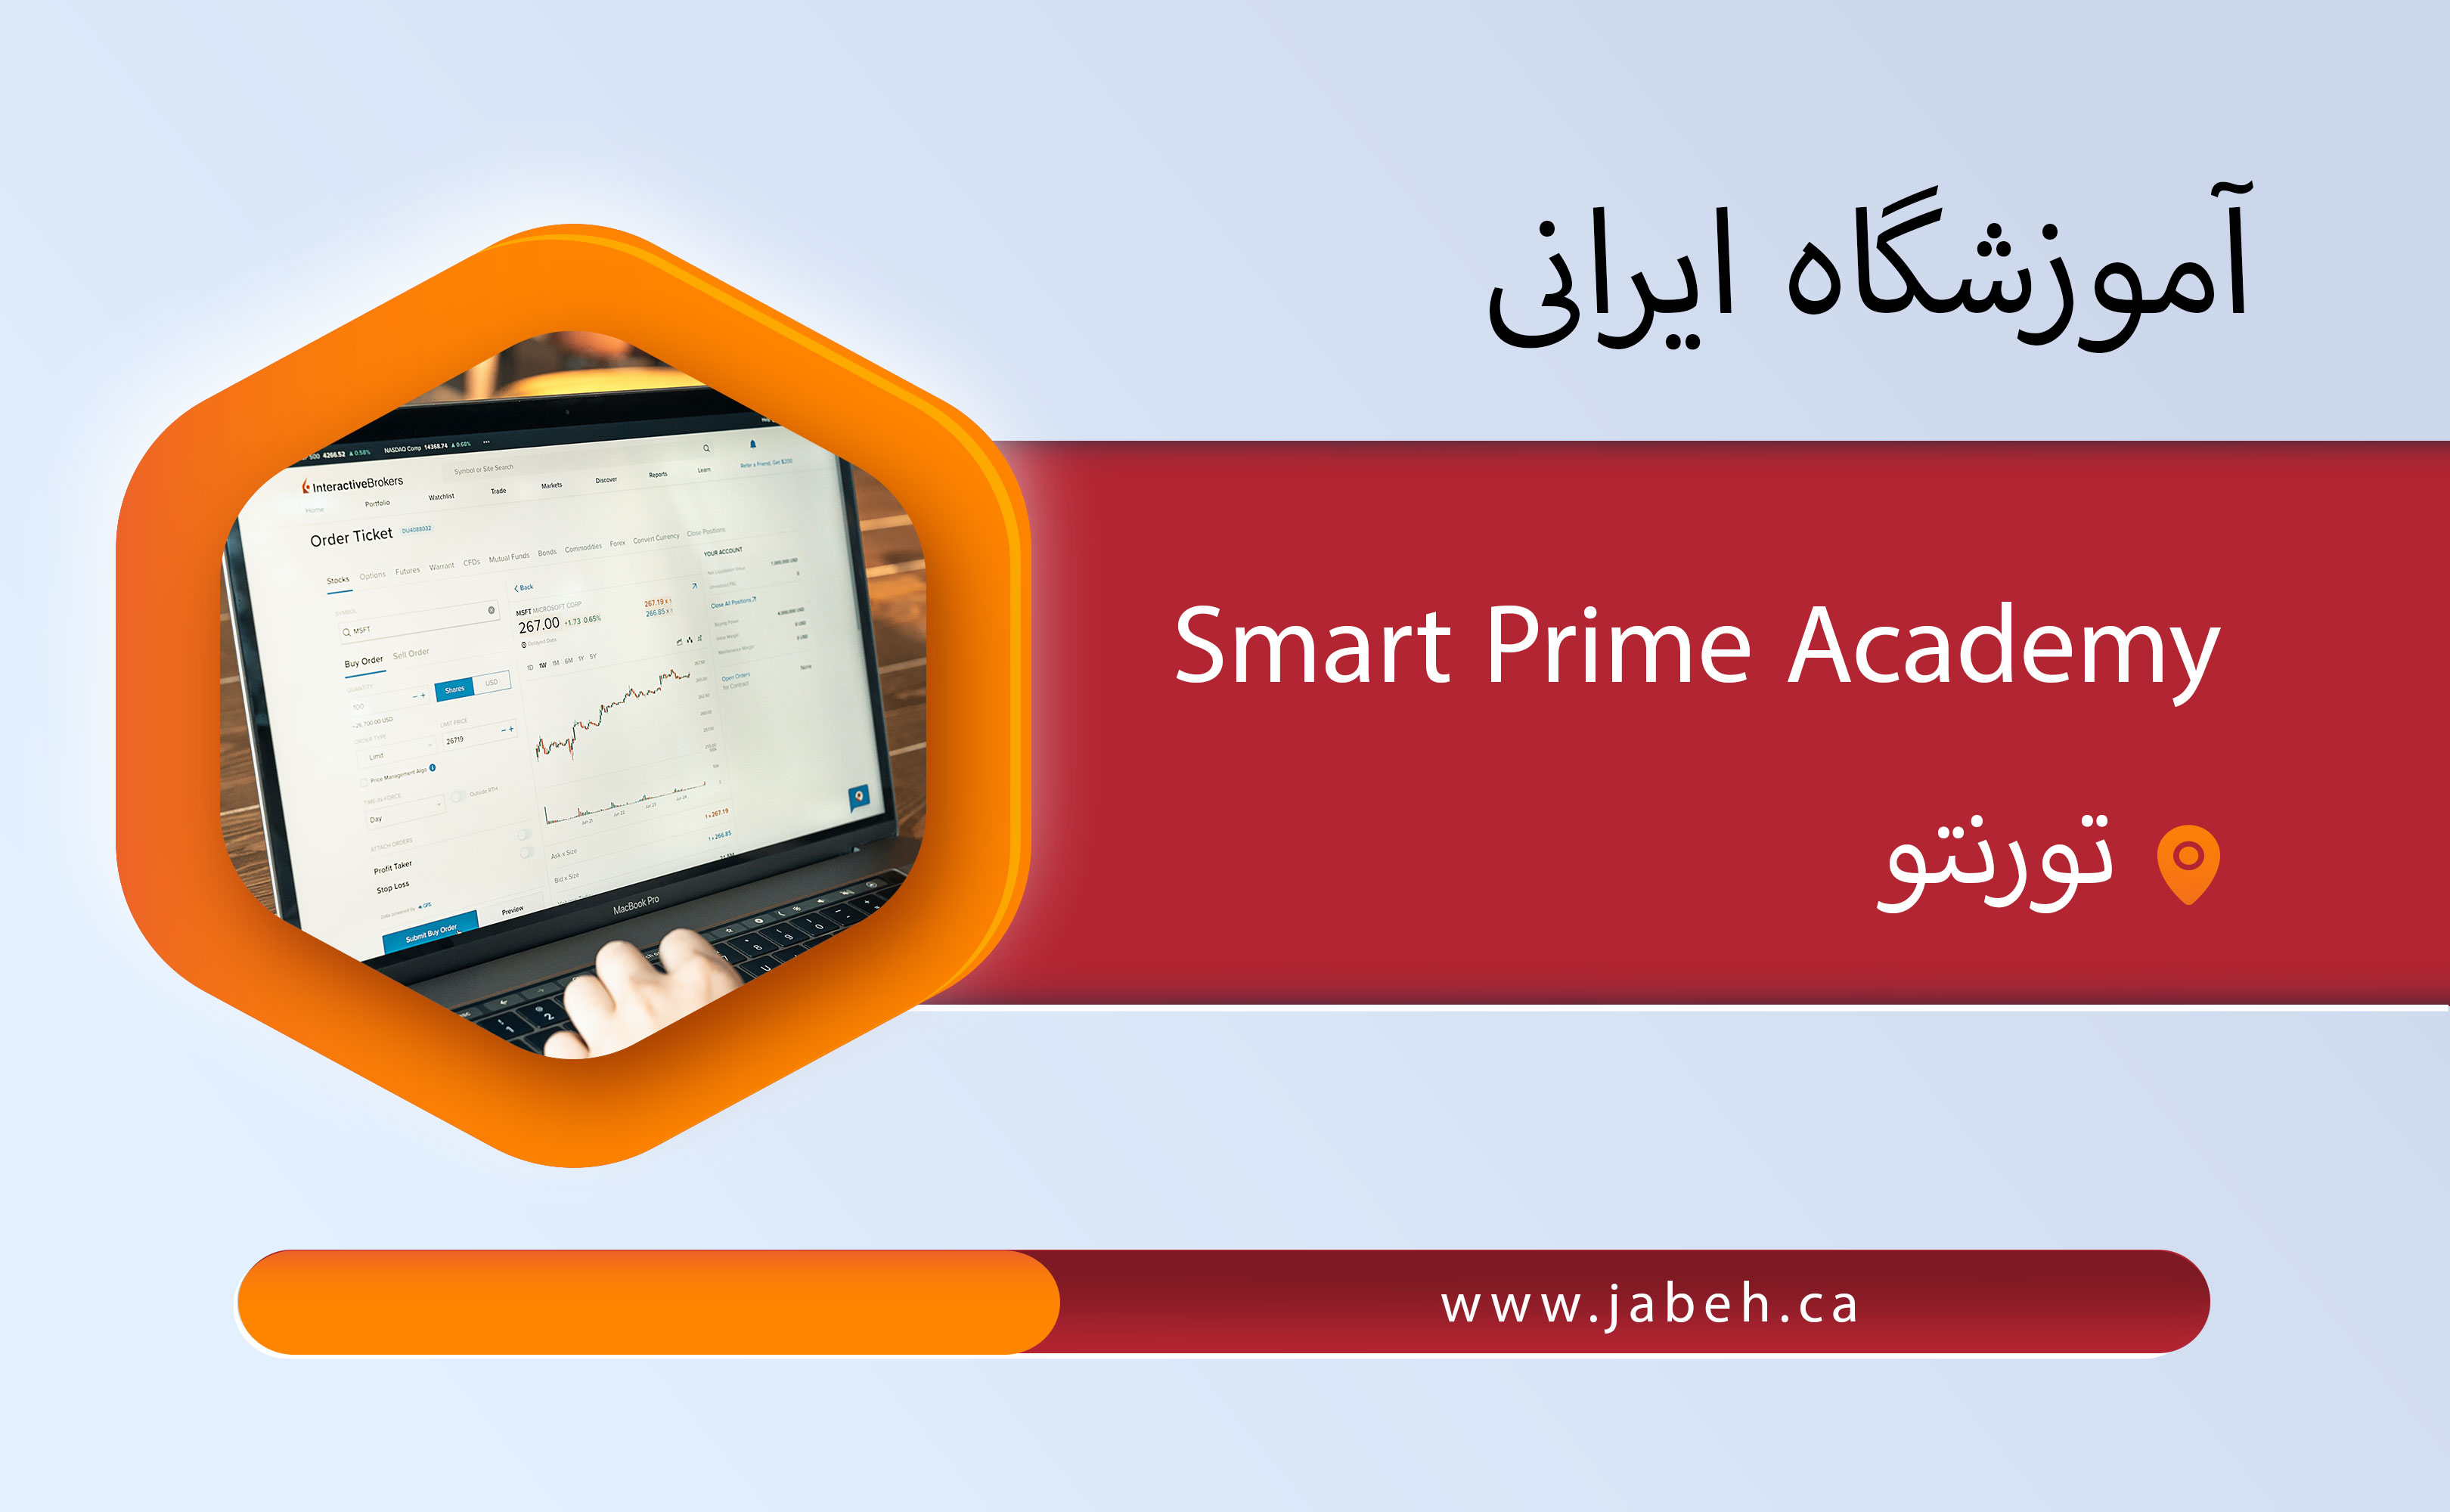 Smart Prime Academy in Toronto